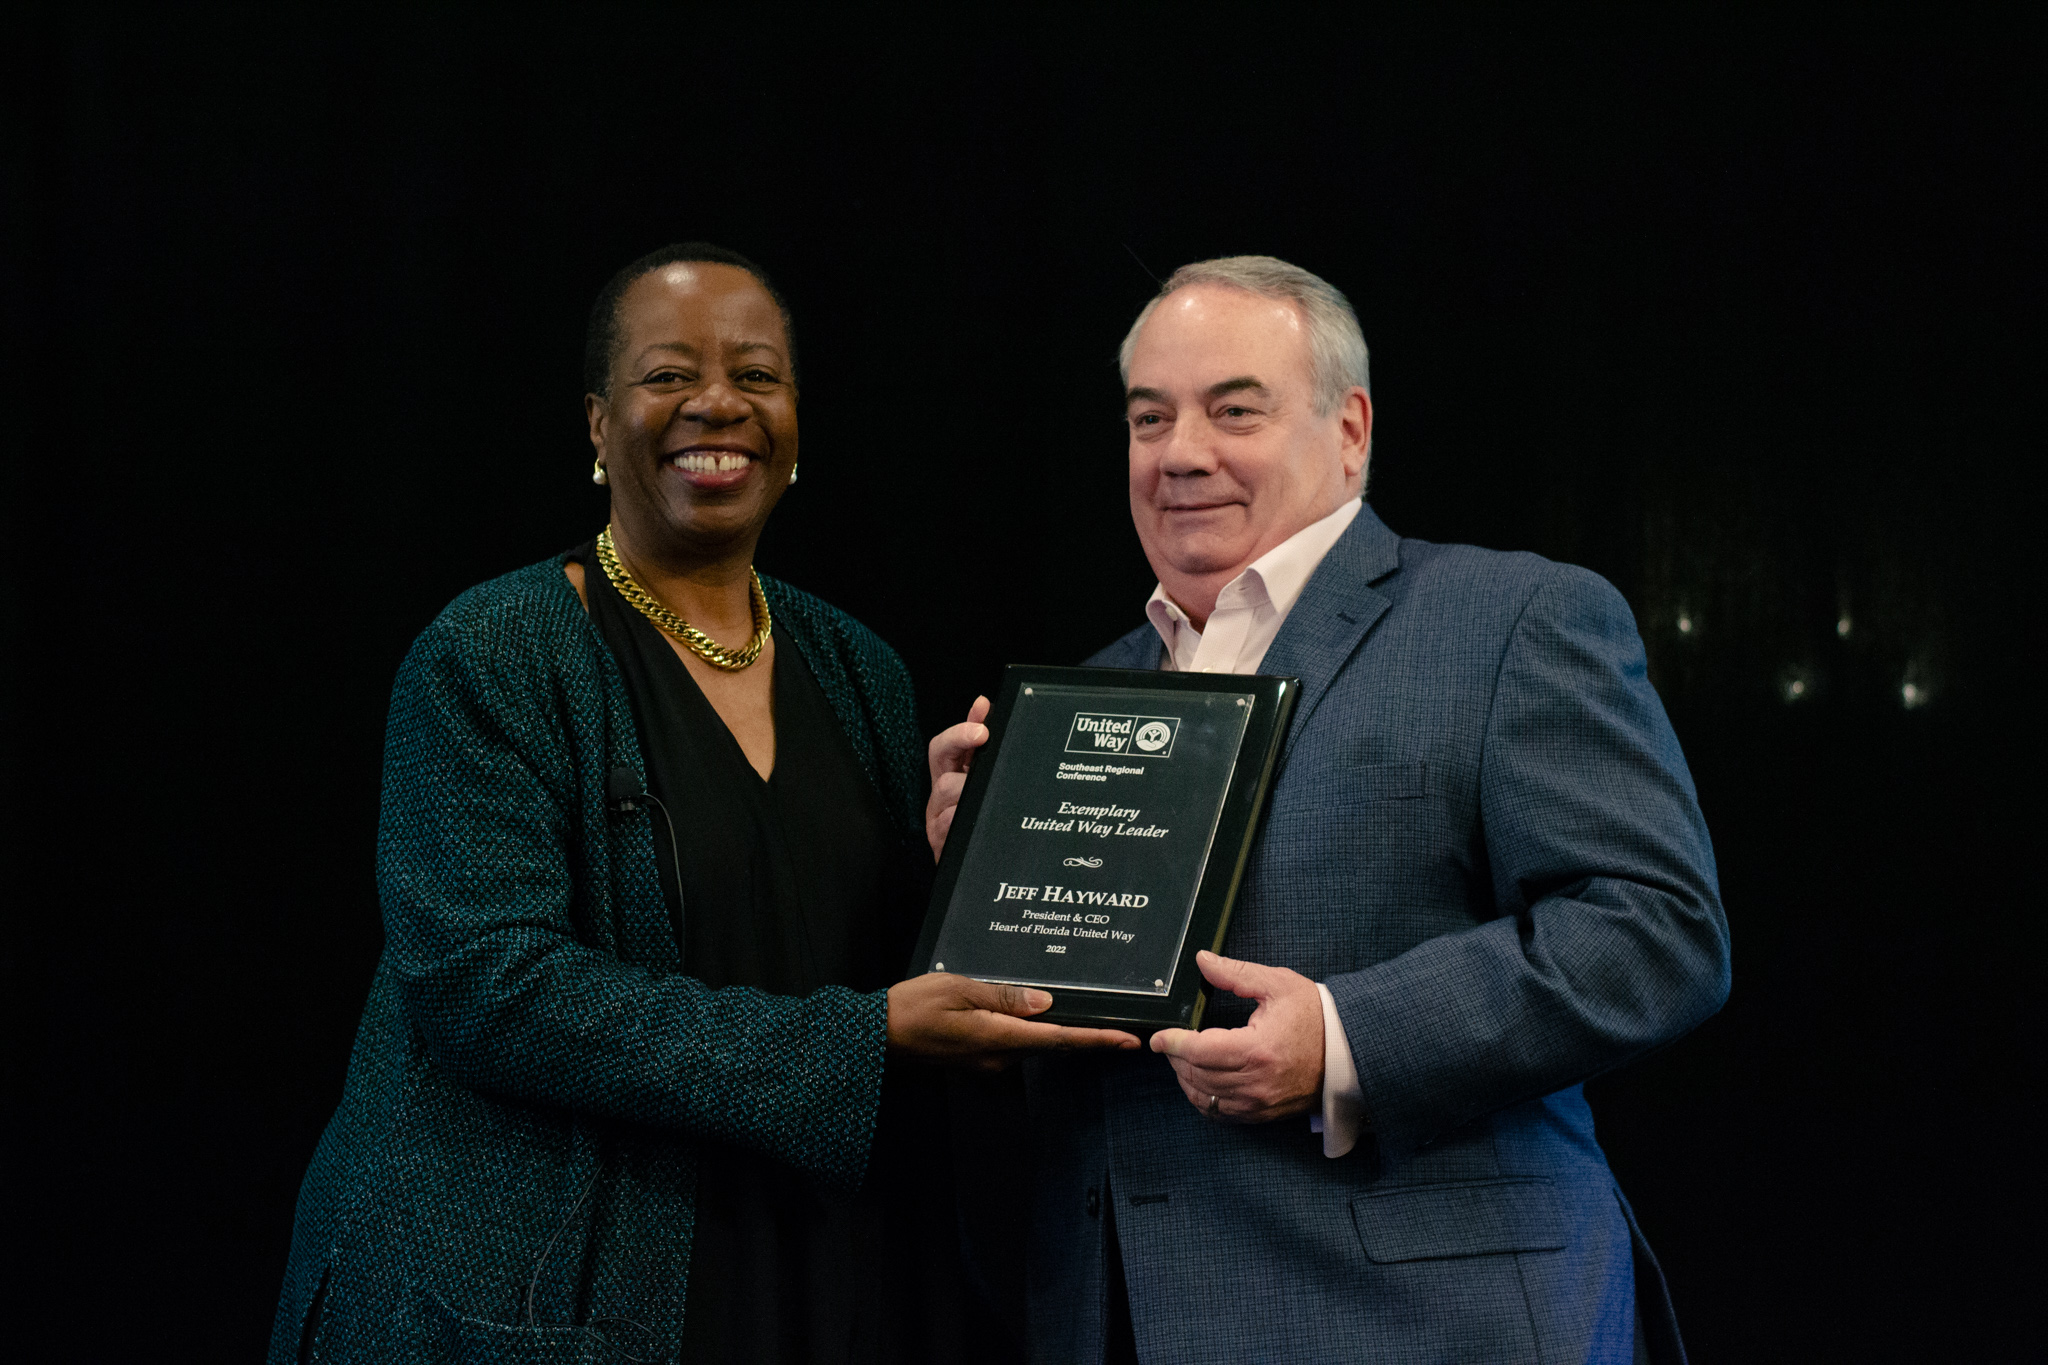 2022 SERC Awards - Angela Williams, UWW Pres. & CEO, presenting Jeff Hayward (CEO, HFUW) with the "Exemplary UW Leader" award (April 2022)